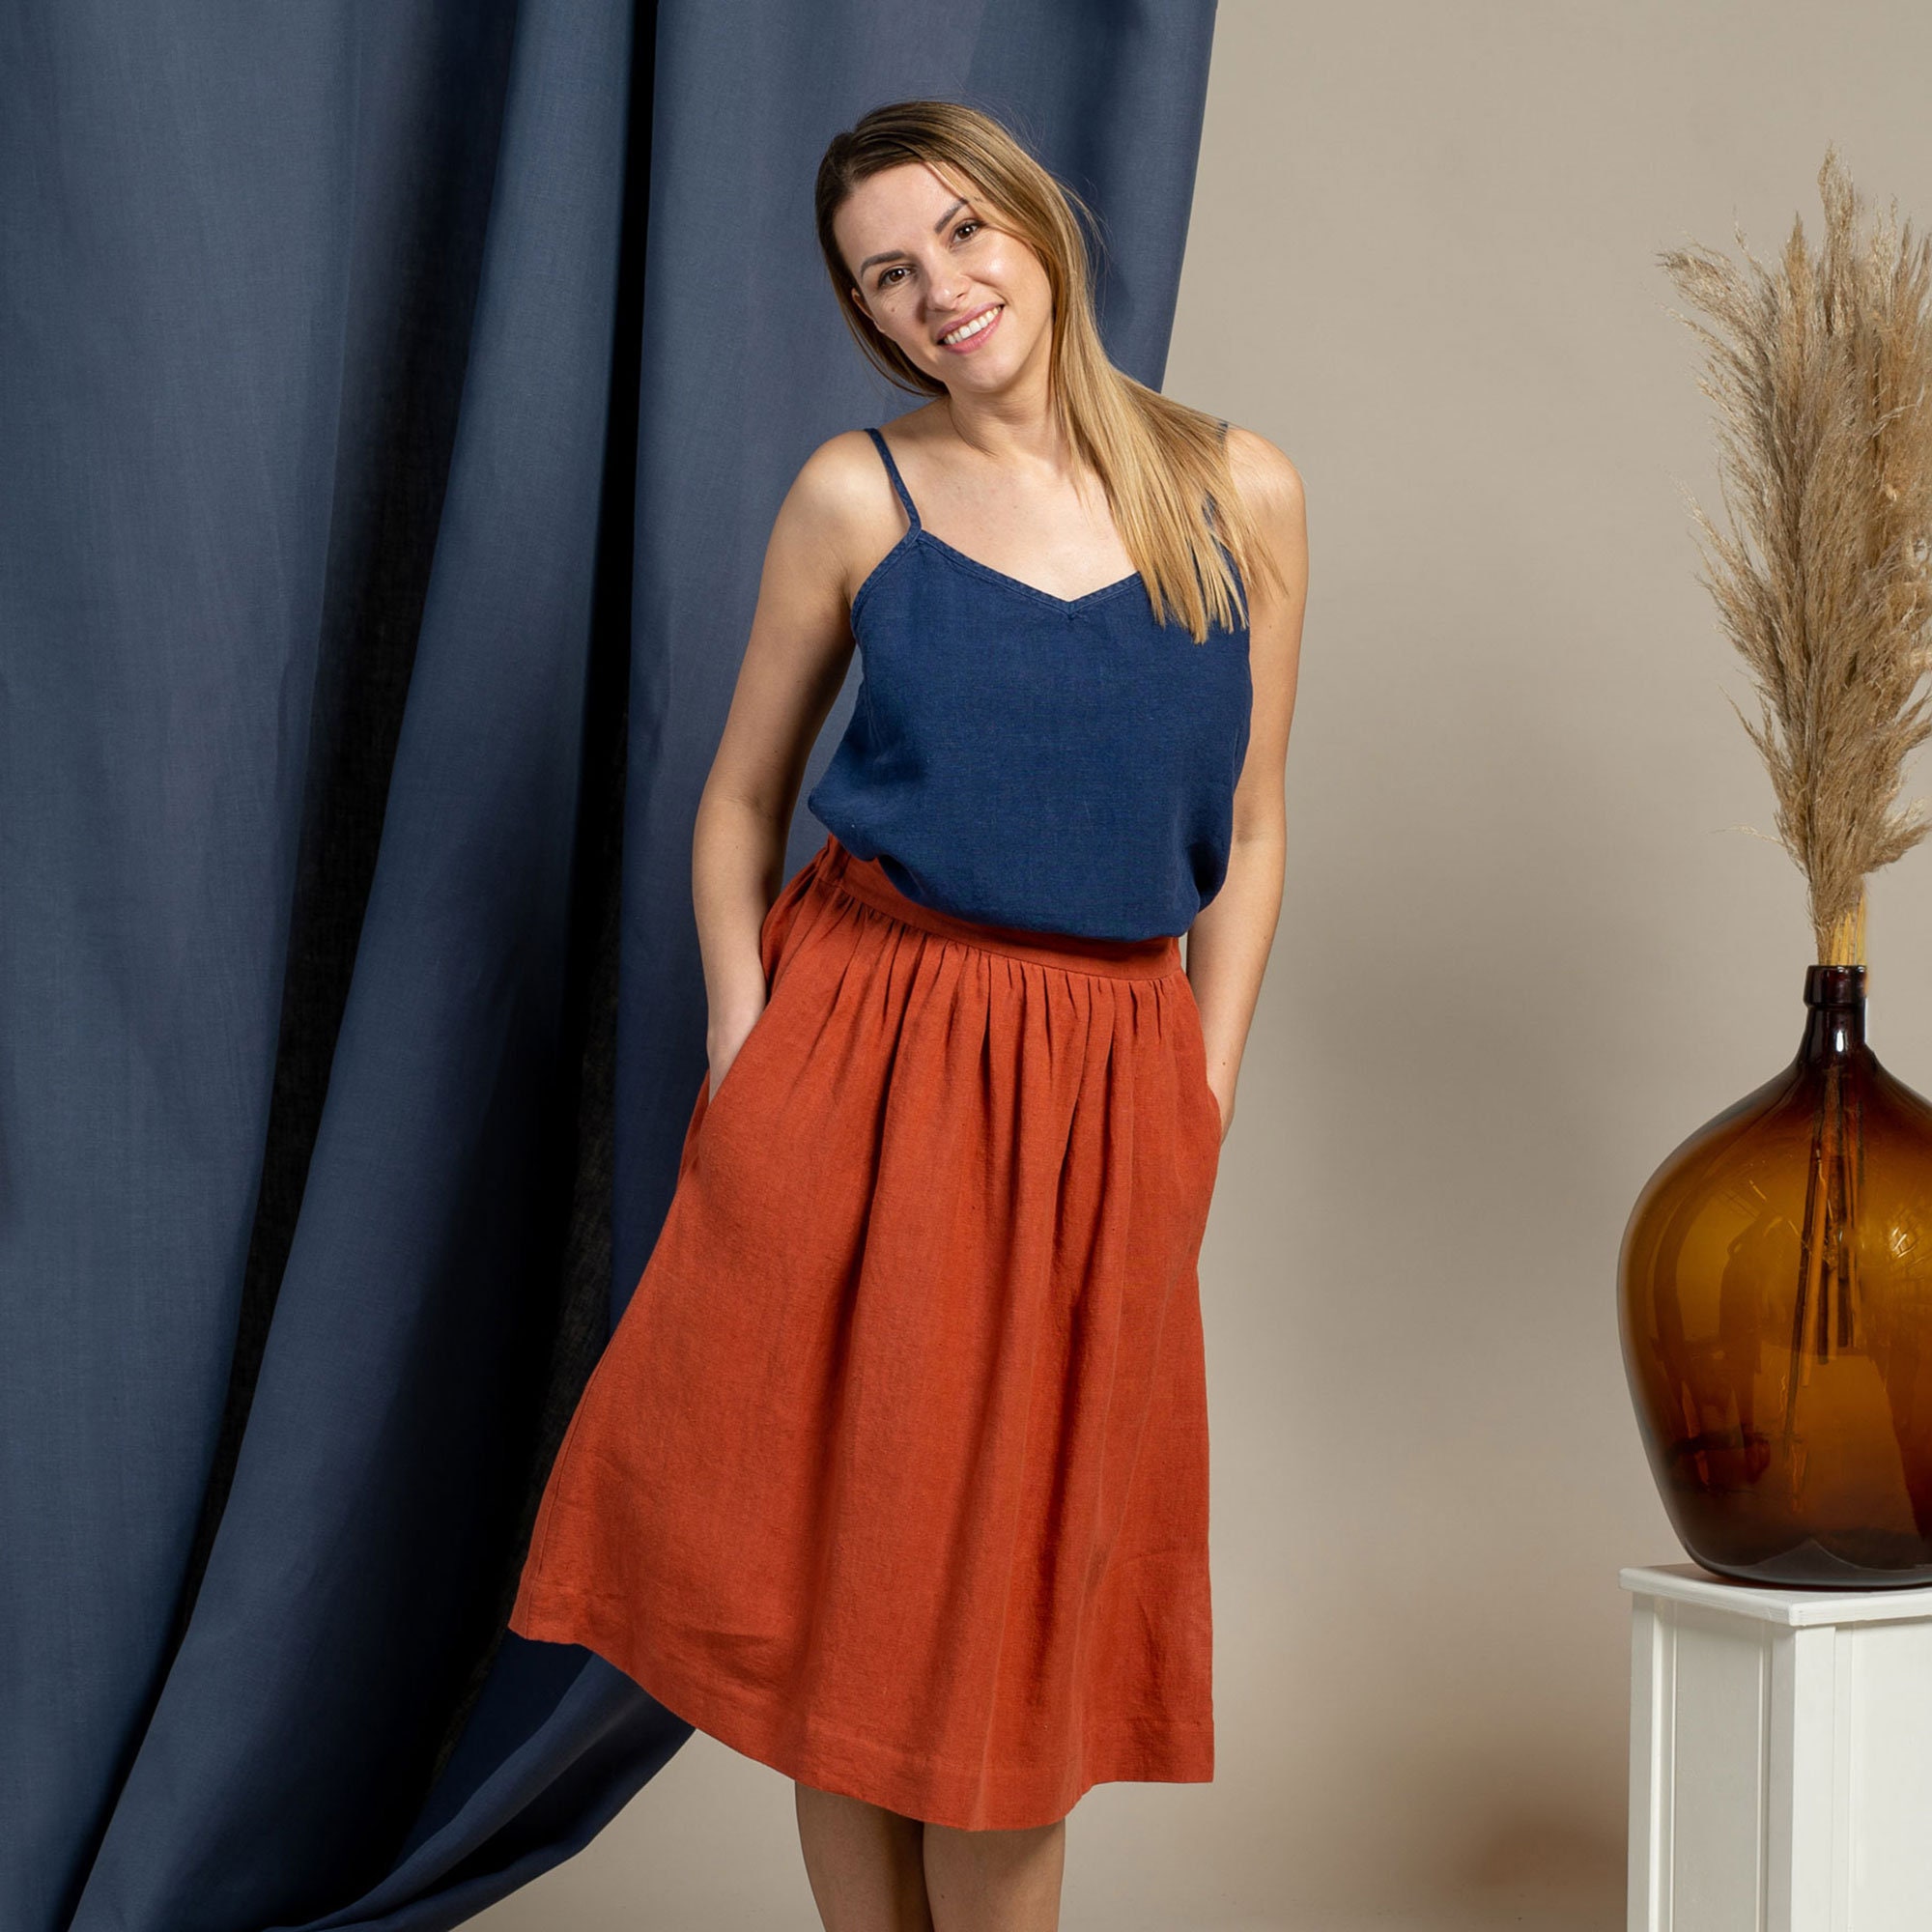 Organic 100% Linen Skirt/High Waisted Skirt with | Etsy